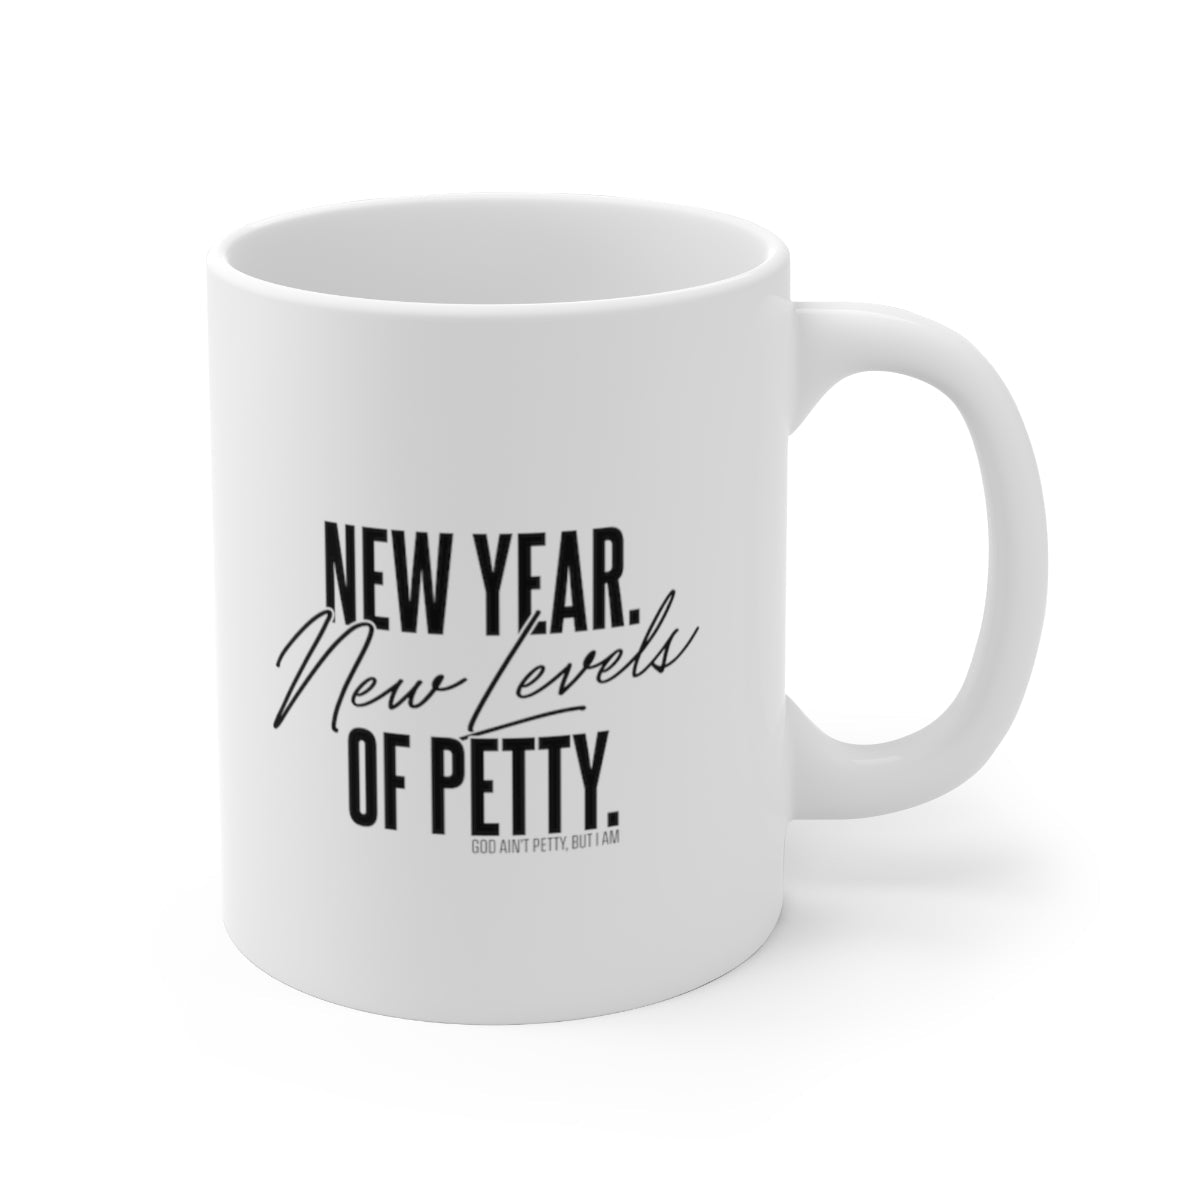 New Year. New Levels of Petty Mug 11oz (White/Black)-Mug-The Original God Ain't Petty But I Am